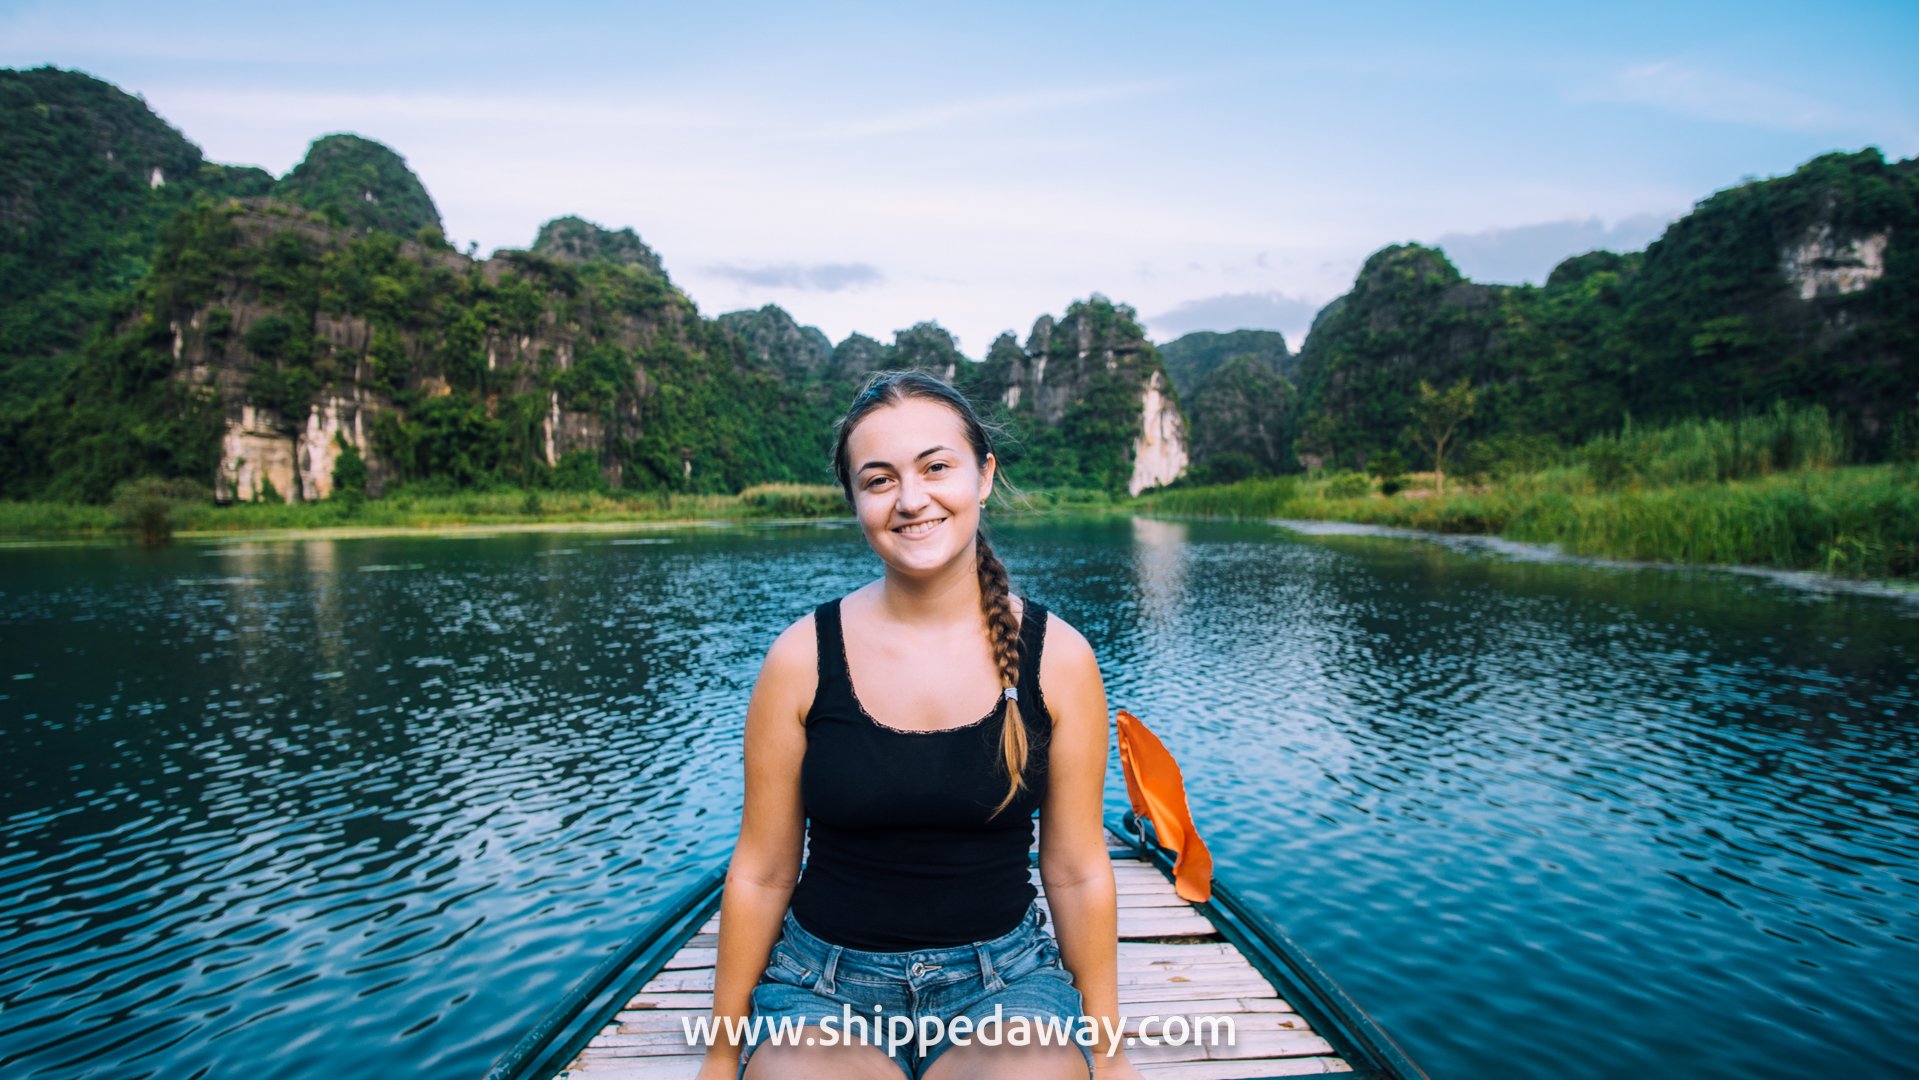 Arijana Tkalčec enjoying the Trang An boat ride in Ninh Binh, Vietnam